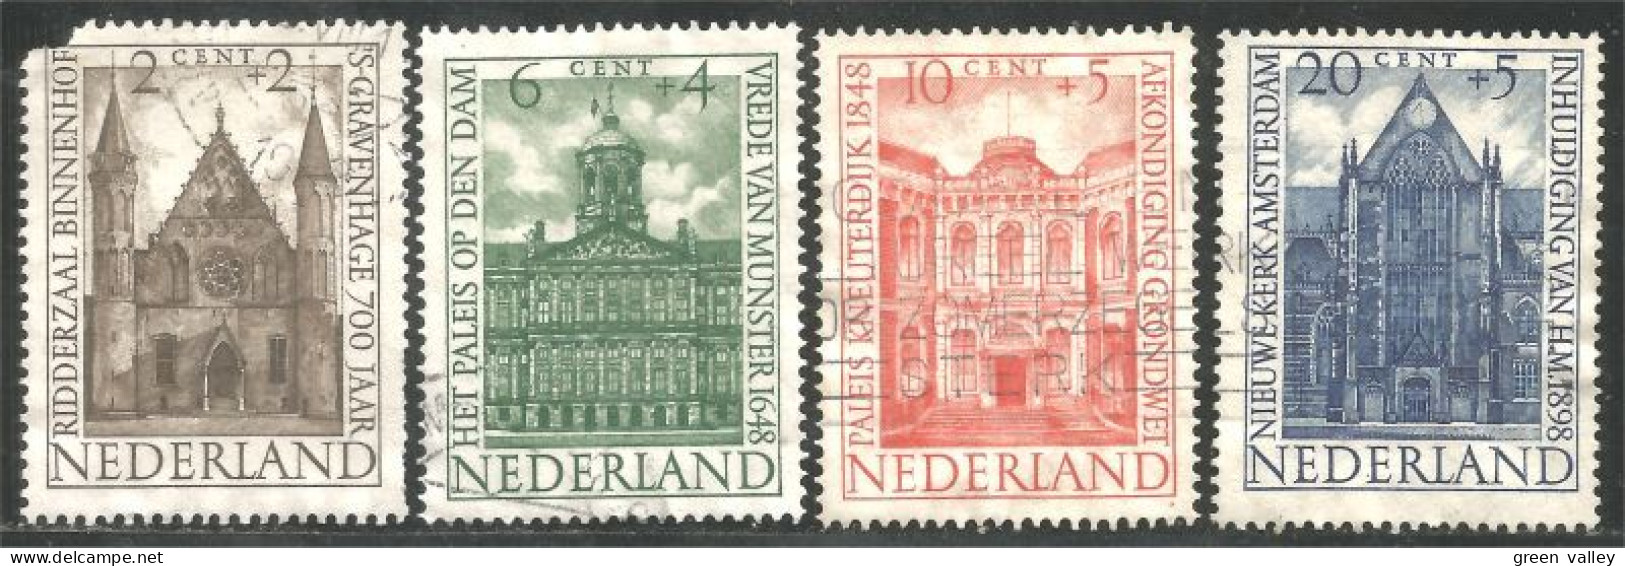 670 Netherlands 1948 Palais Royal Palace Kneuterdyk Knights Chevalier (NET-107) - Used Stamps